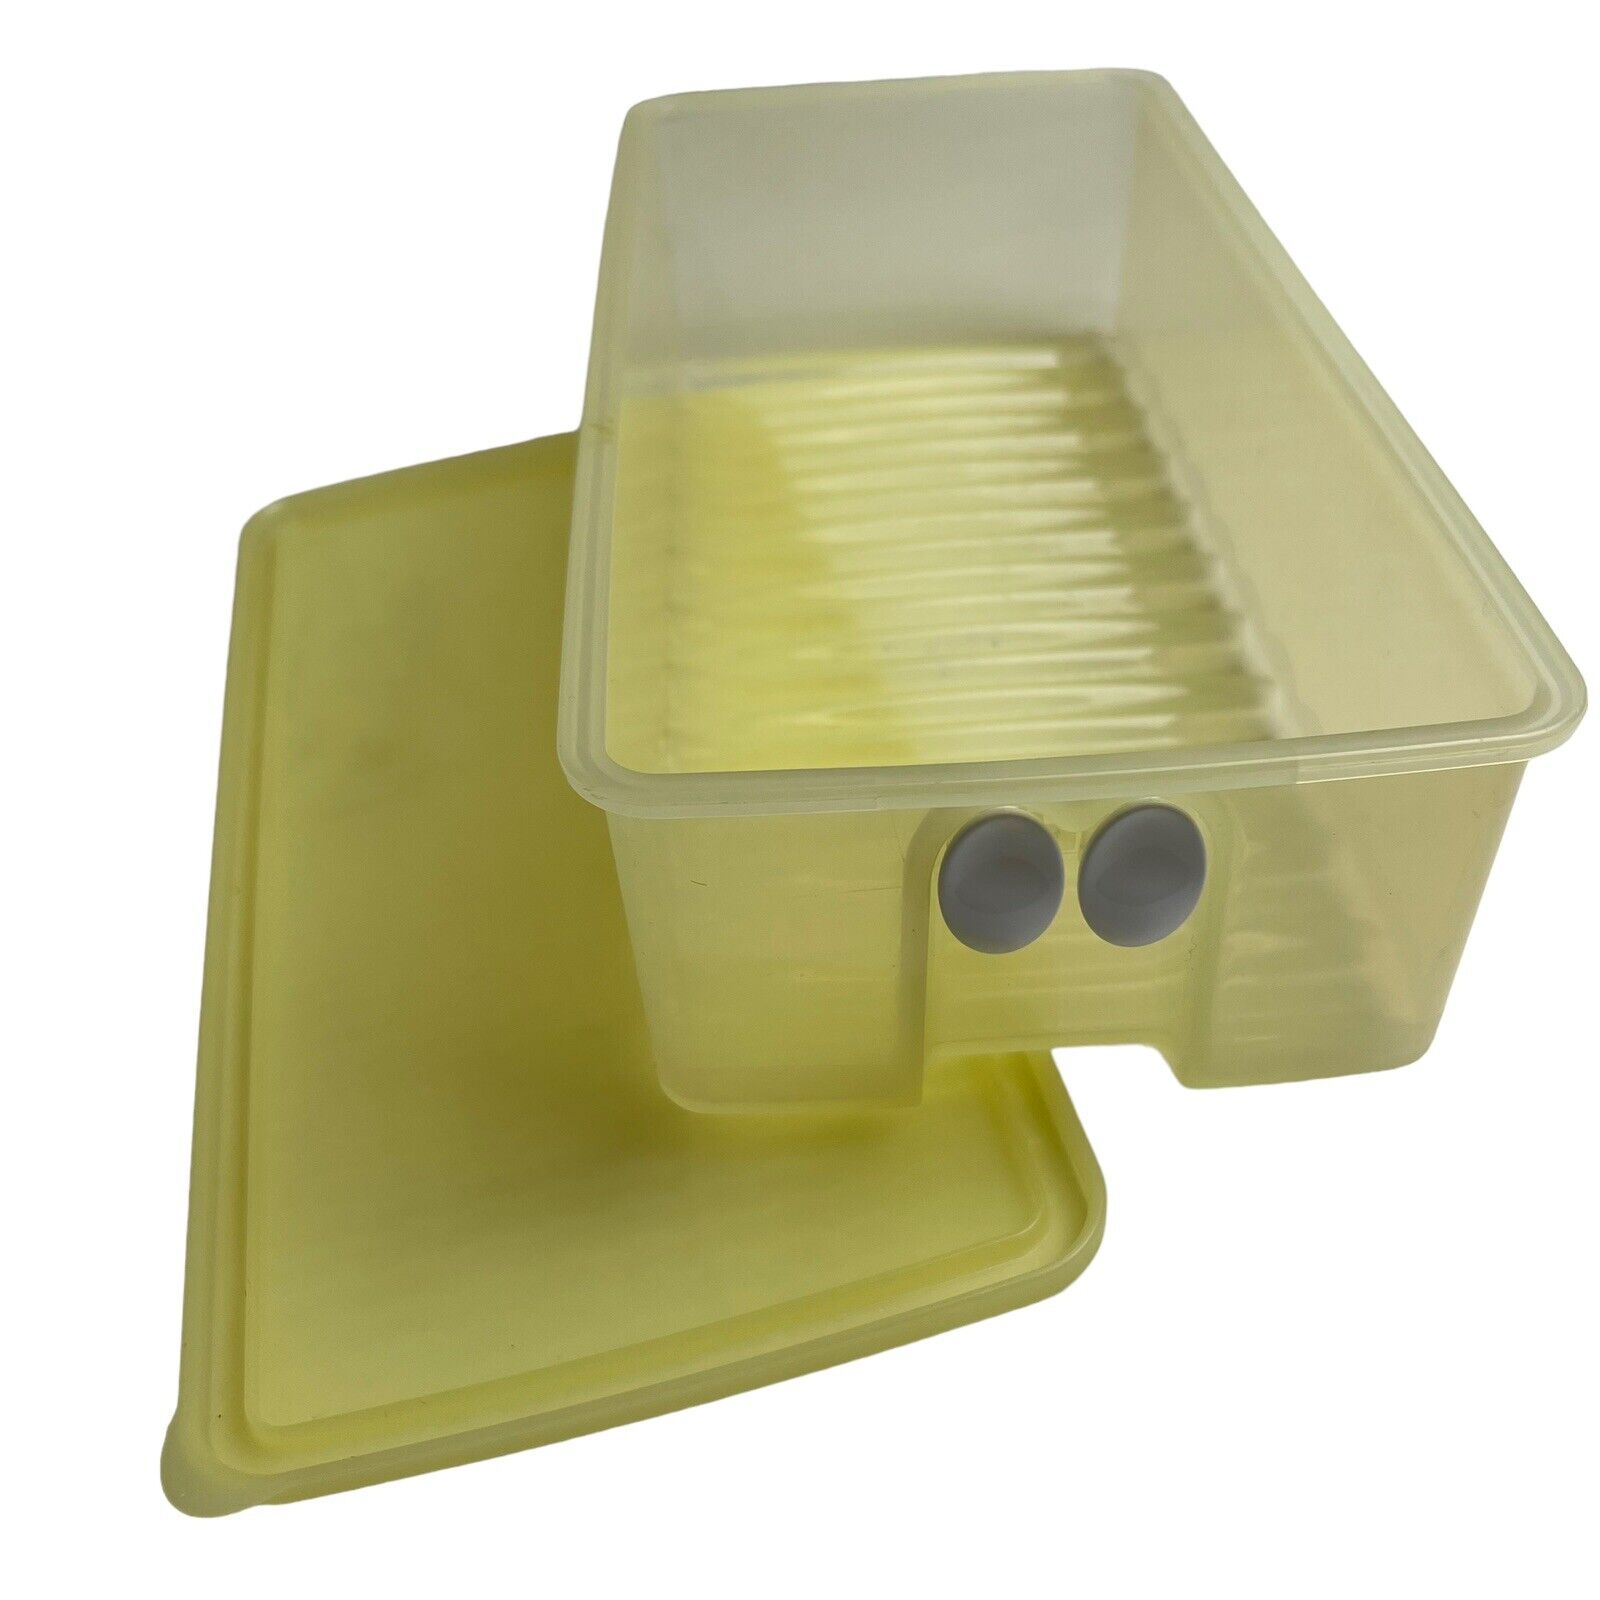 Tupperware FridgeSmart Yellow Vented Container & Lid 8 1/2 Cup